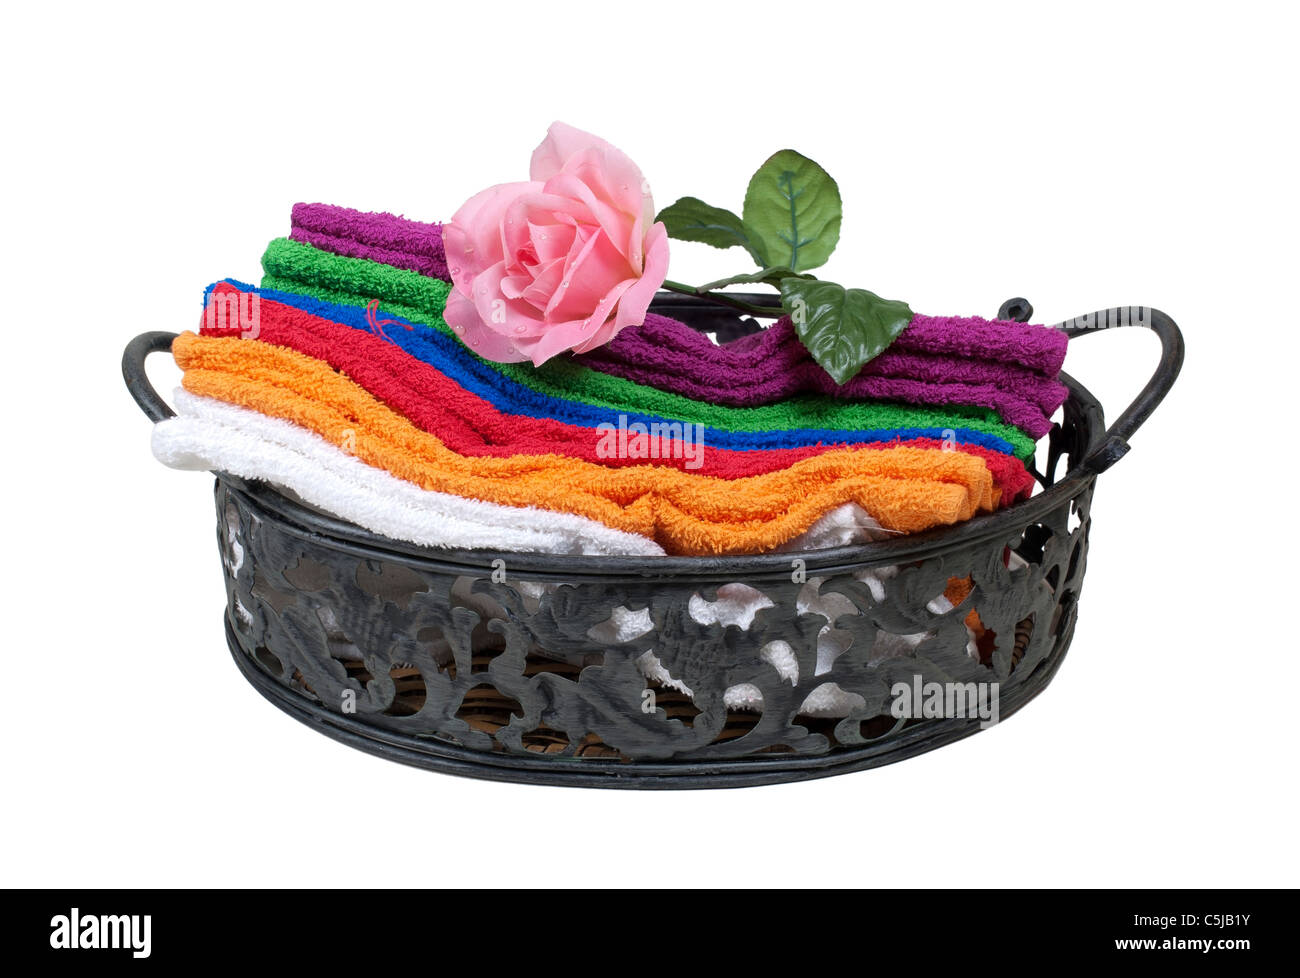 Asciugamani colorati nel vassoio Foto Stock